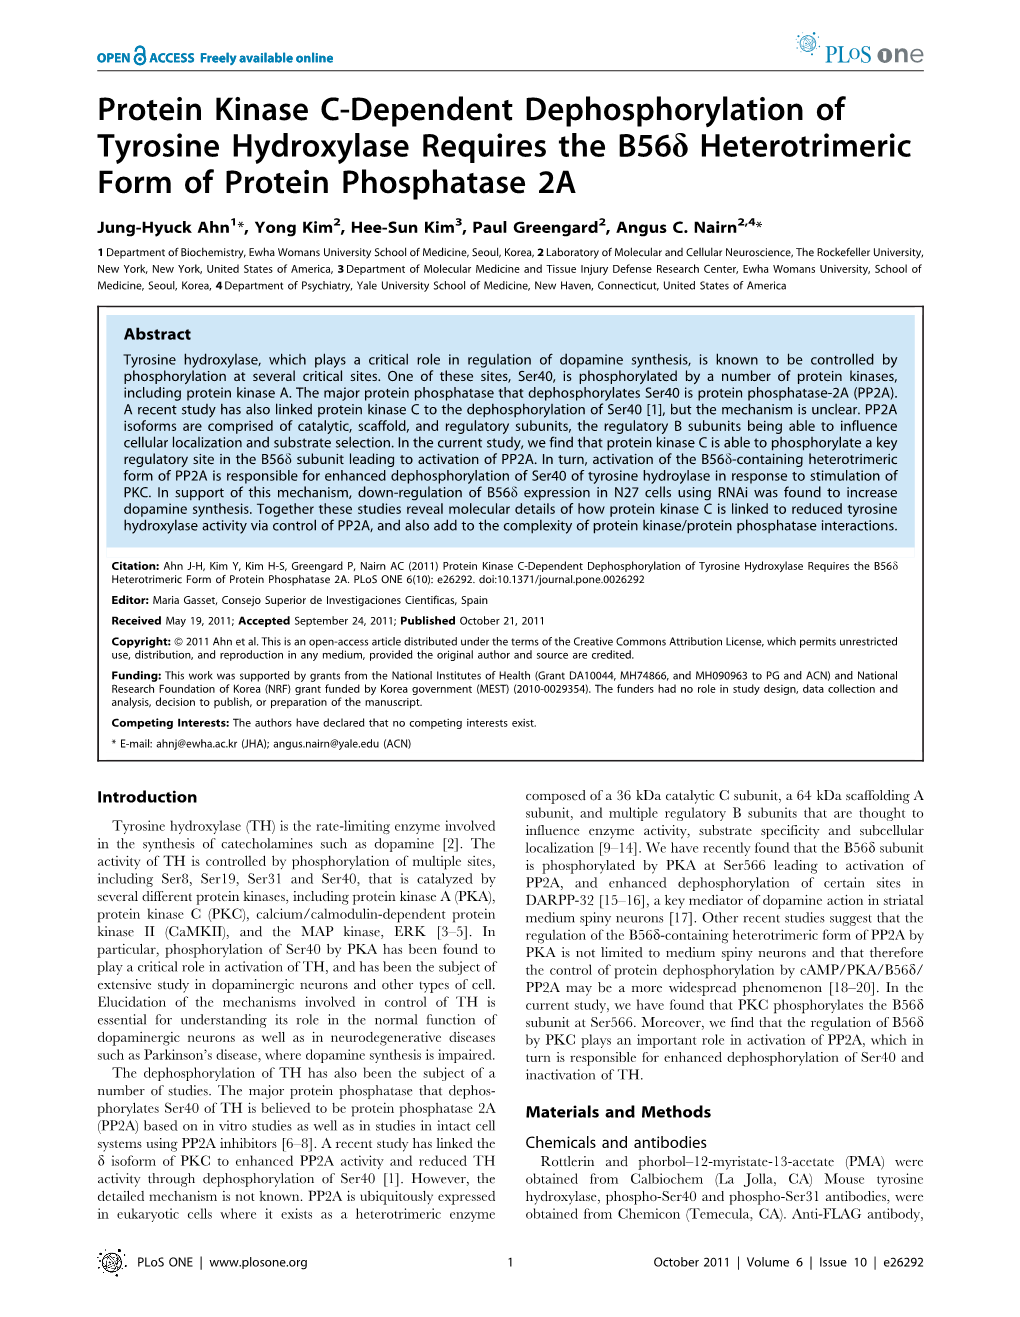 Protein Kinase C-Dependent Dephosphorylation of Tyrosine Hydroxylase Requires the B56d Heterotrimeric Form of Protein Phosphatase 2A